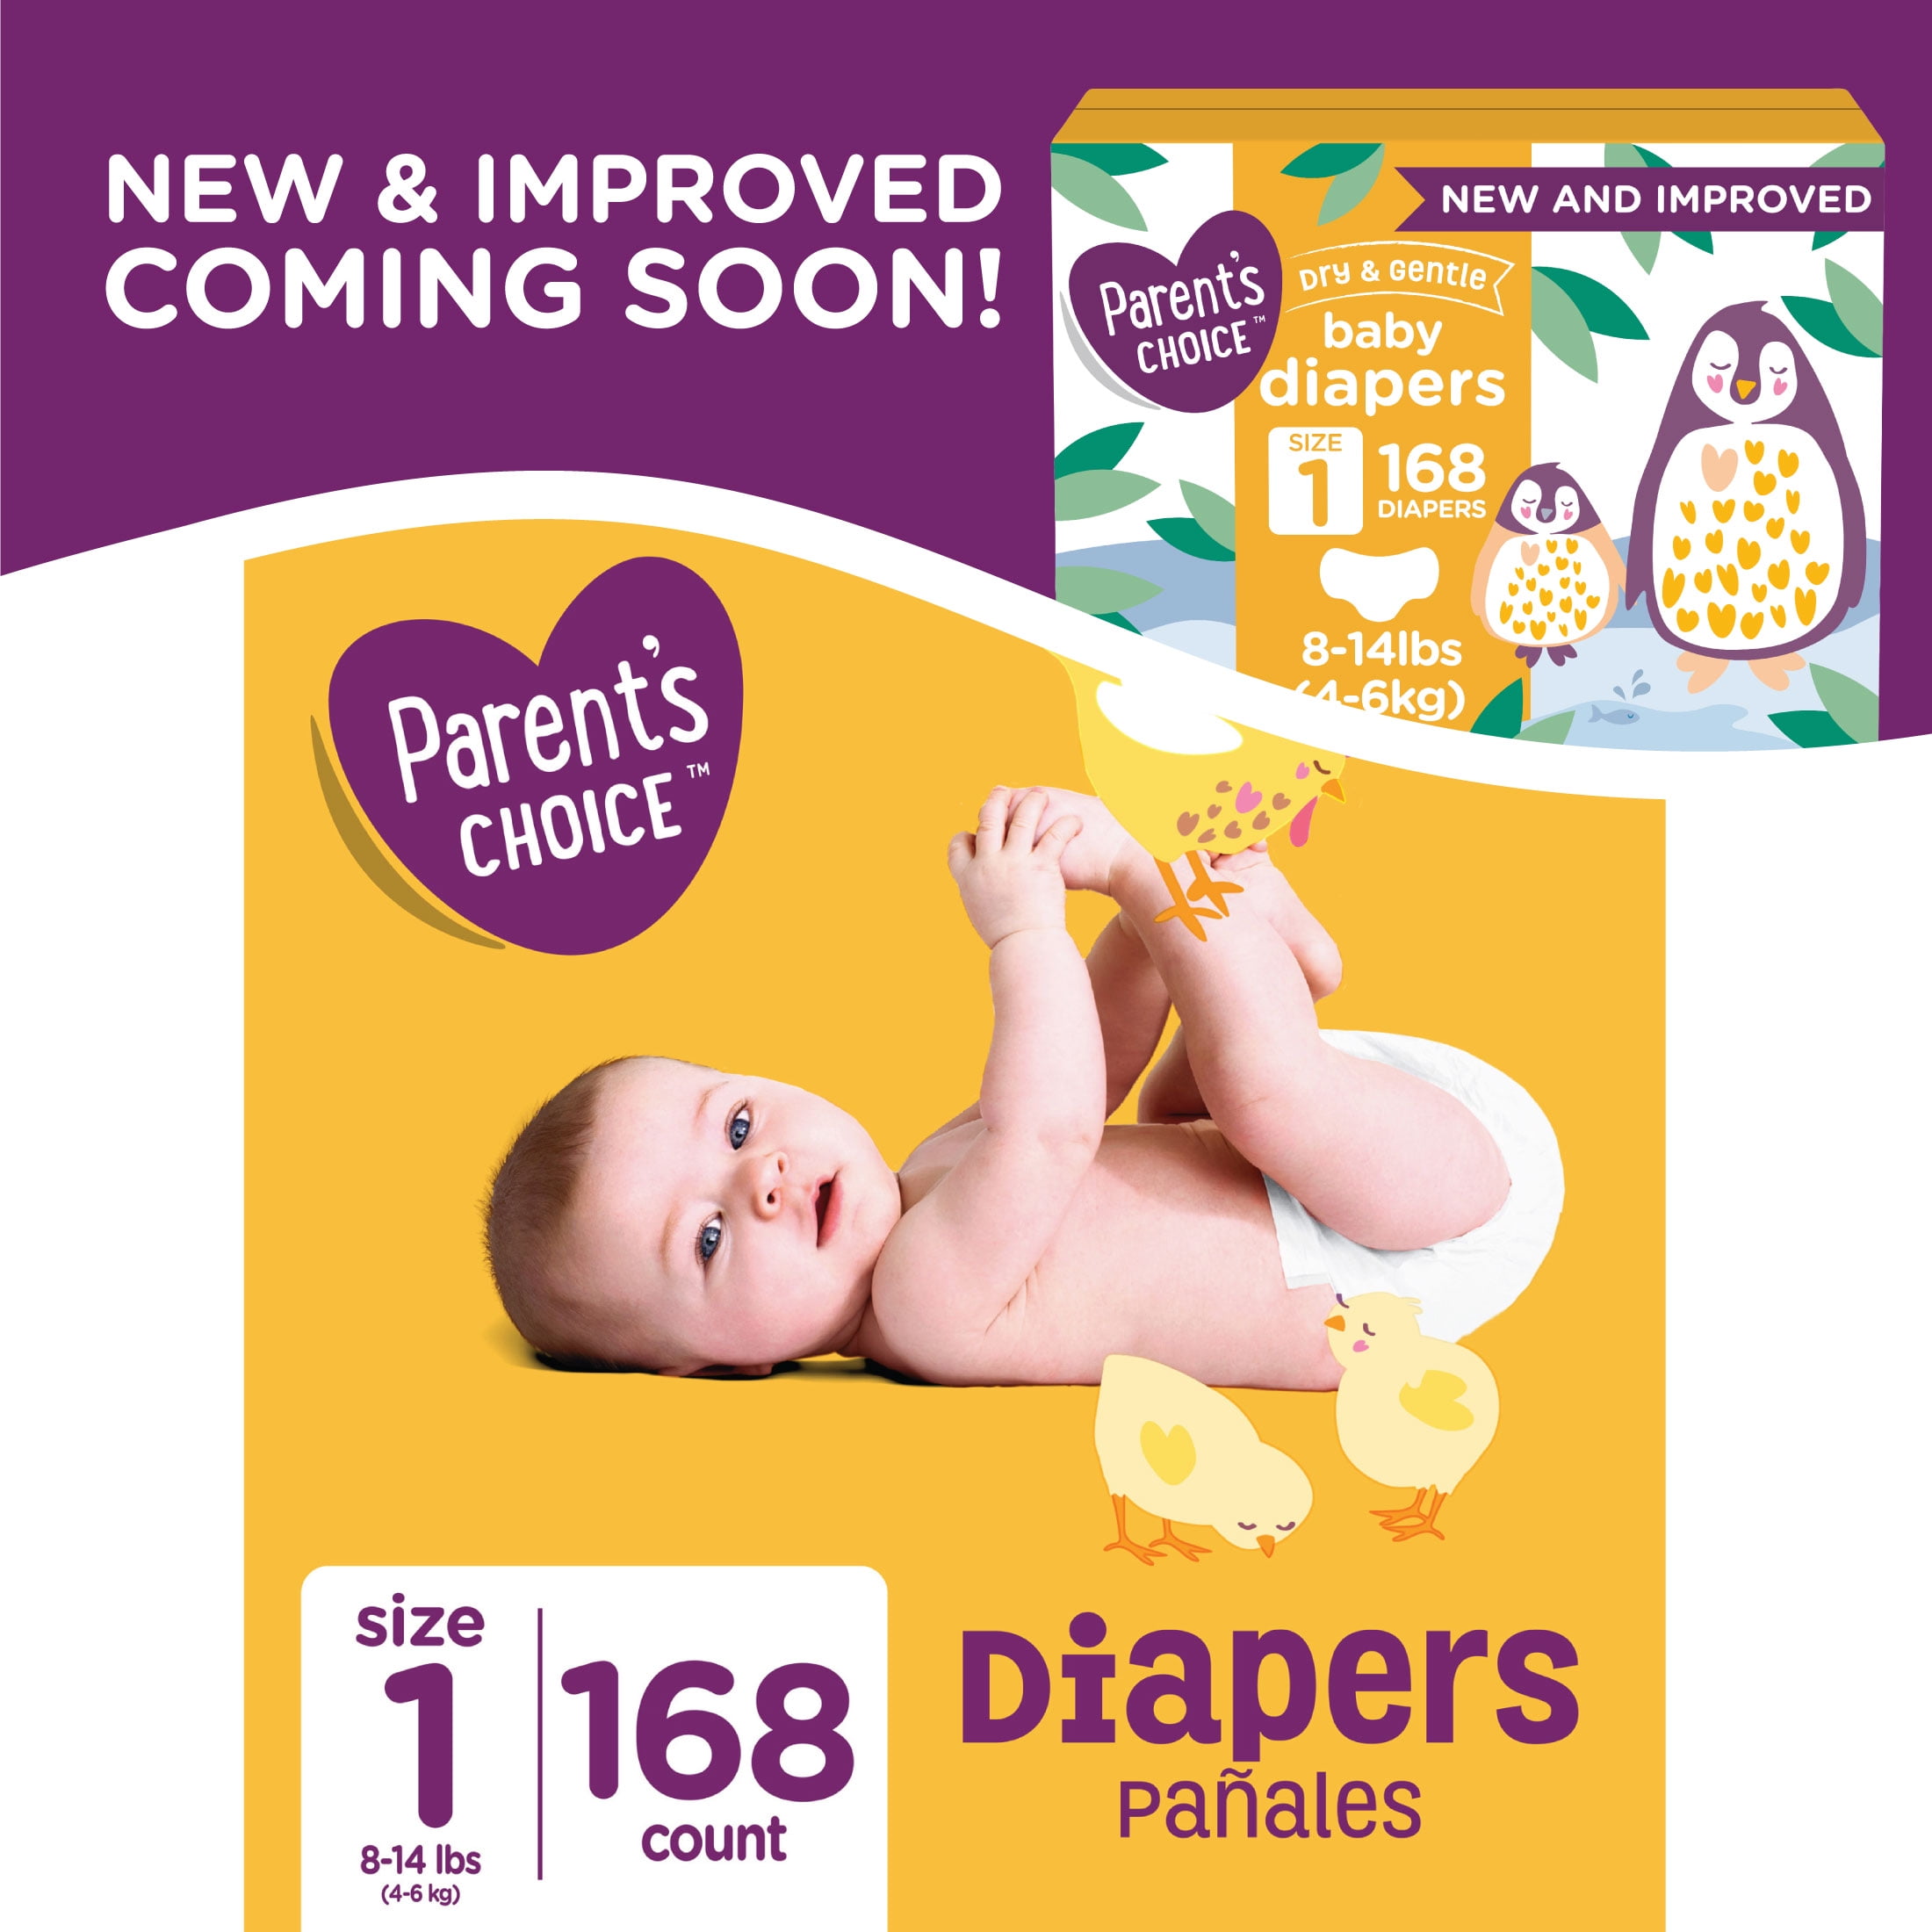 parents choice 160 diapers